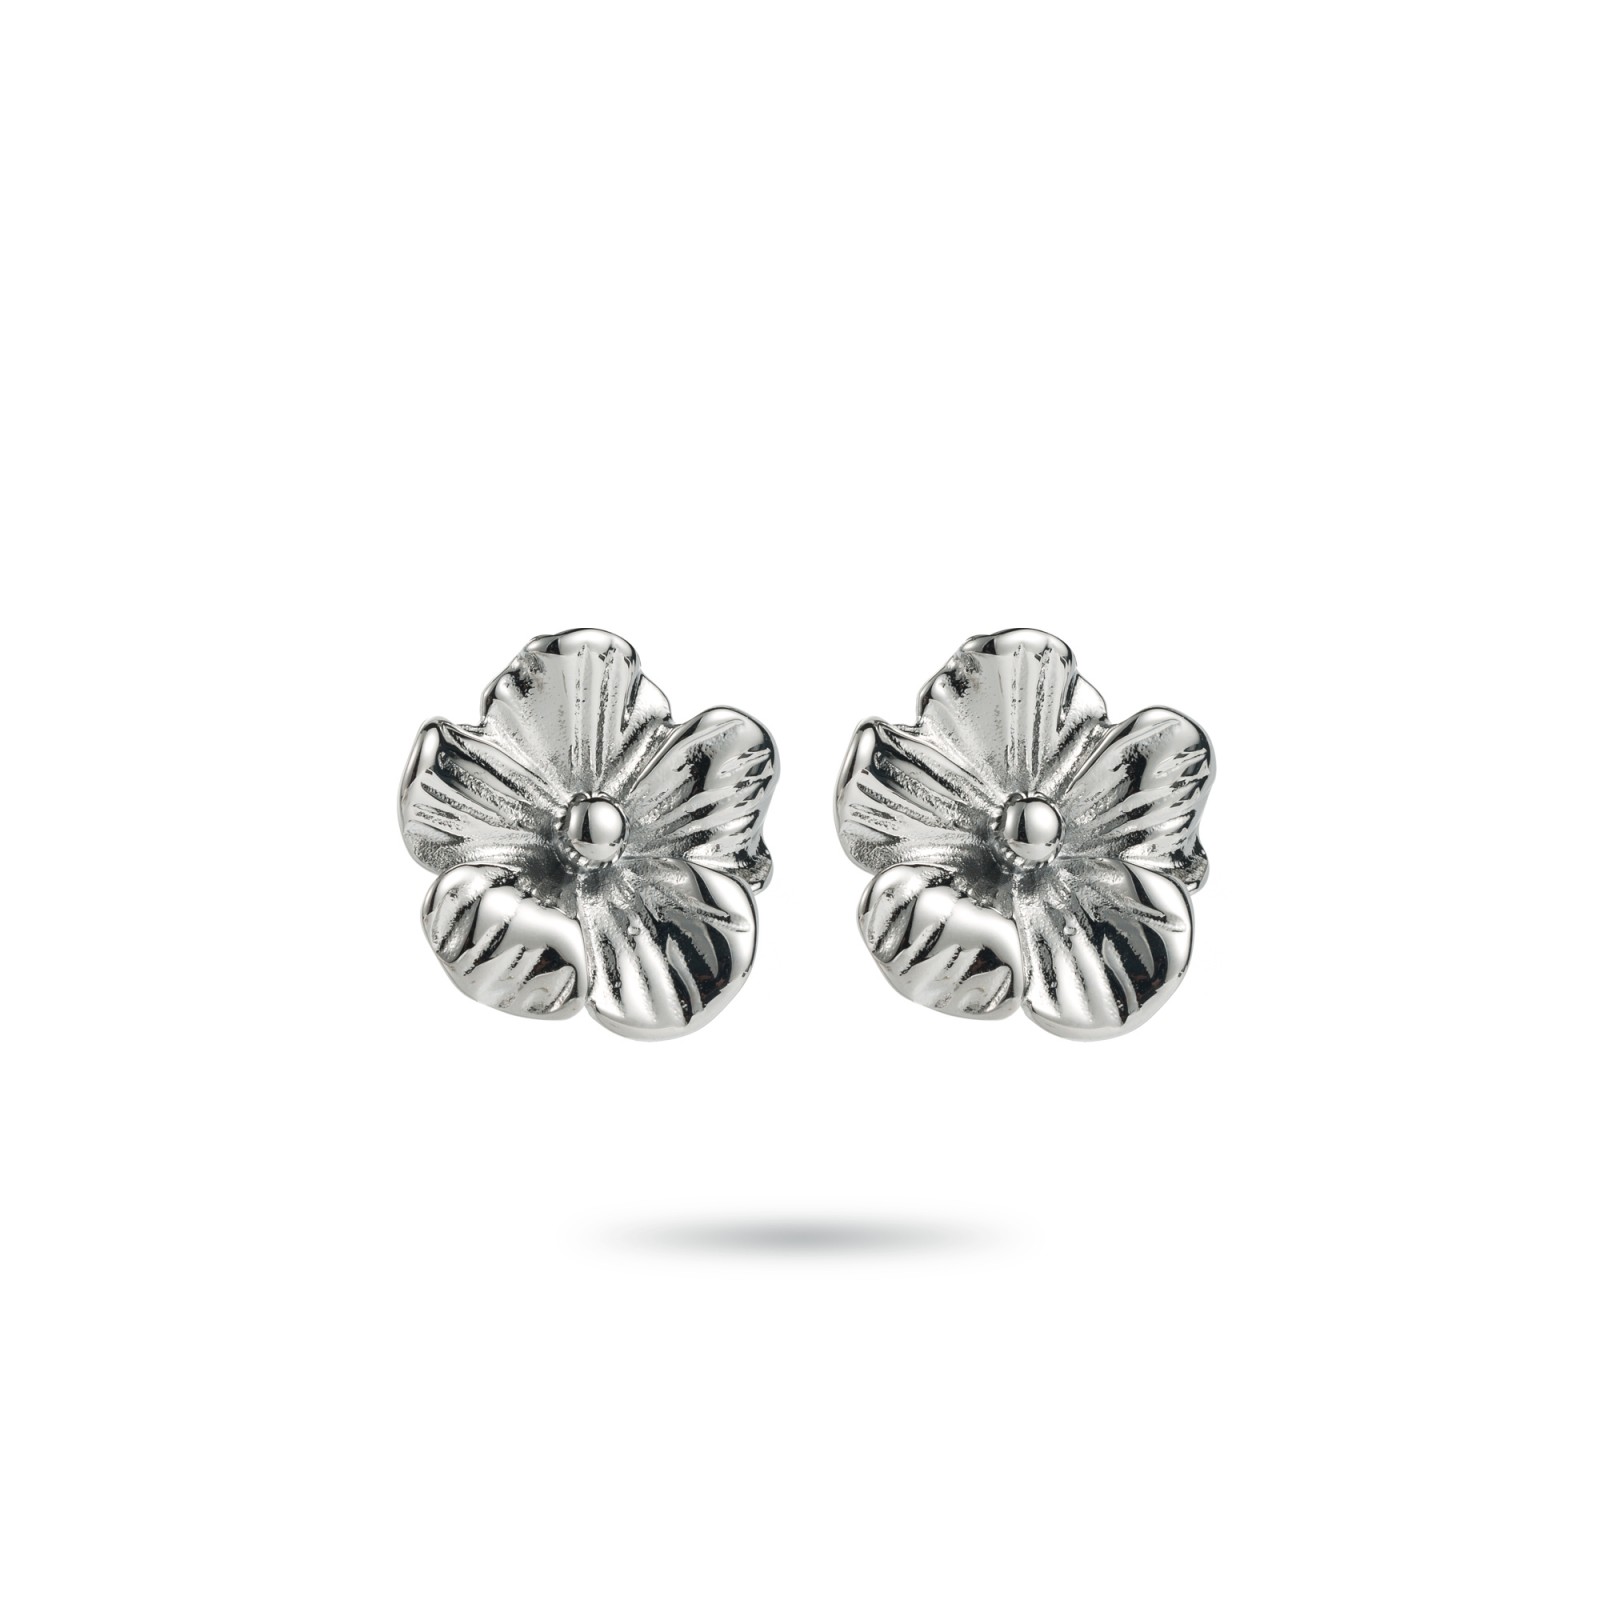 Flower Earrings Set